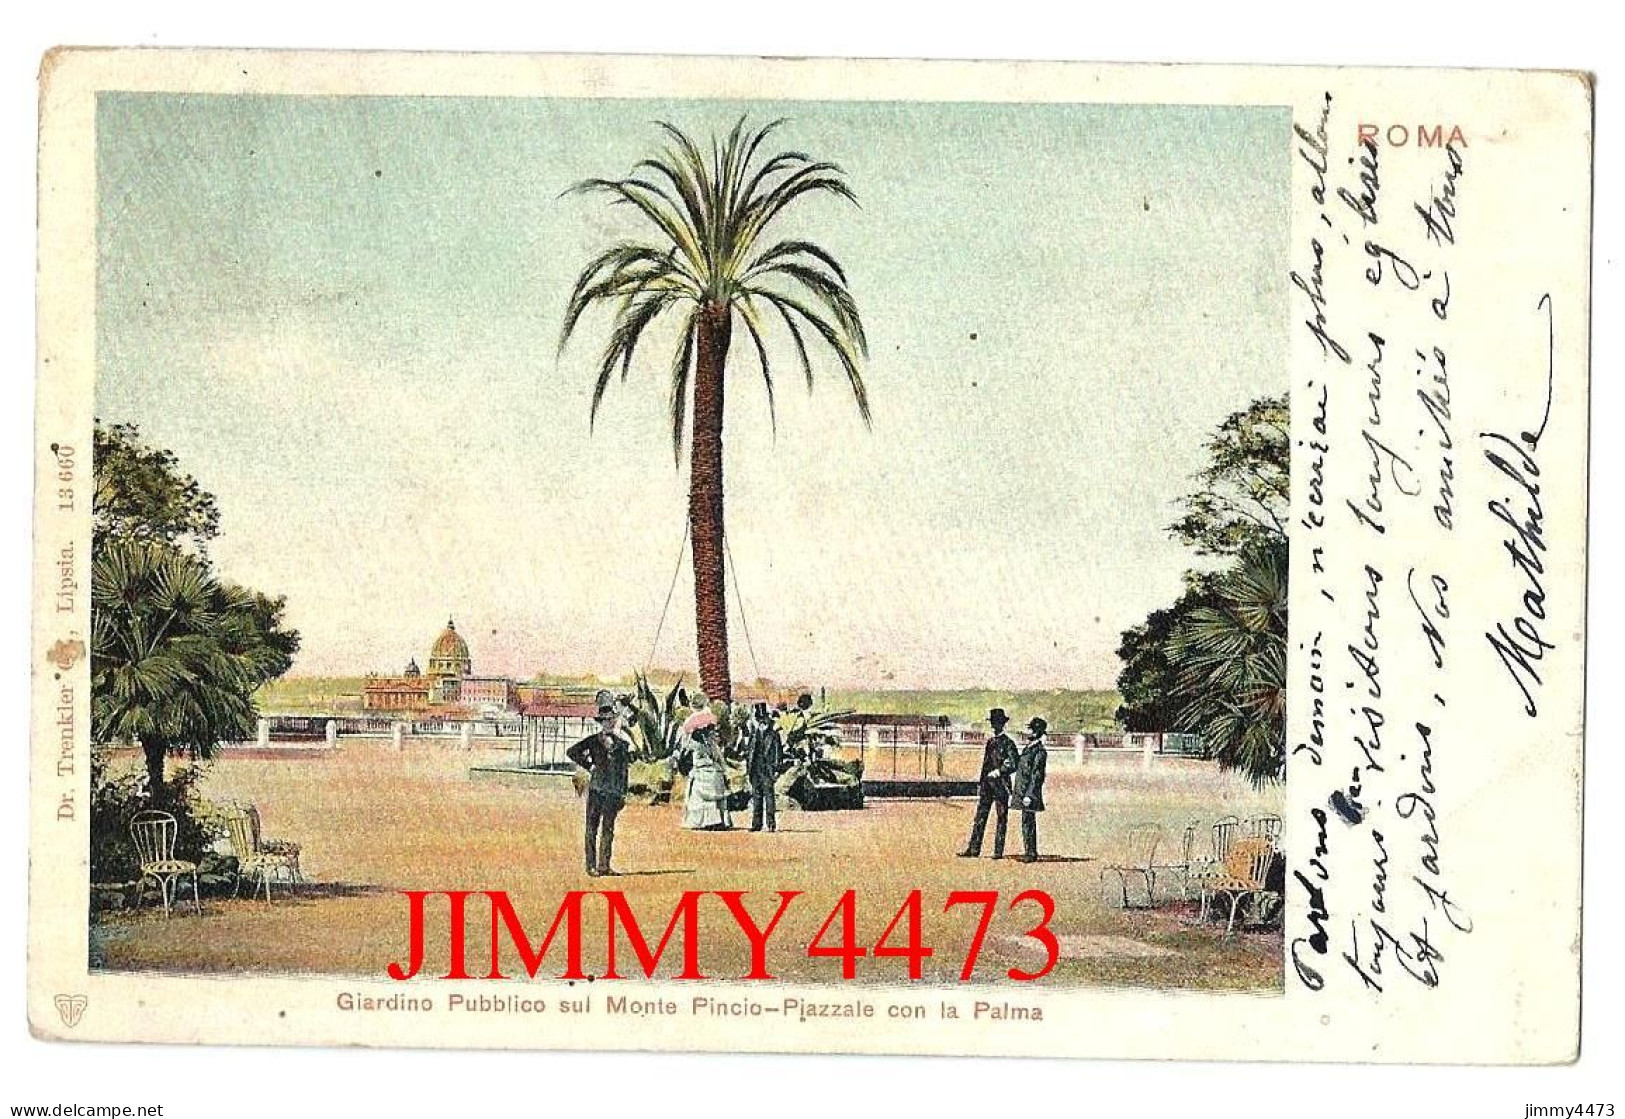 ROMA Lazio En 1902 - Giardino Pubblico Sul Monte Pincio Piazzale Con La Palma Dr.Trenkler Lipsia - Parks & Gardens